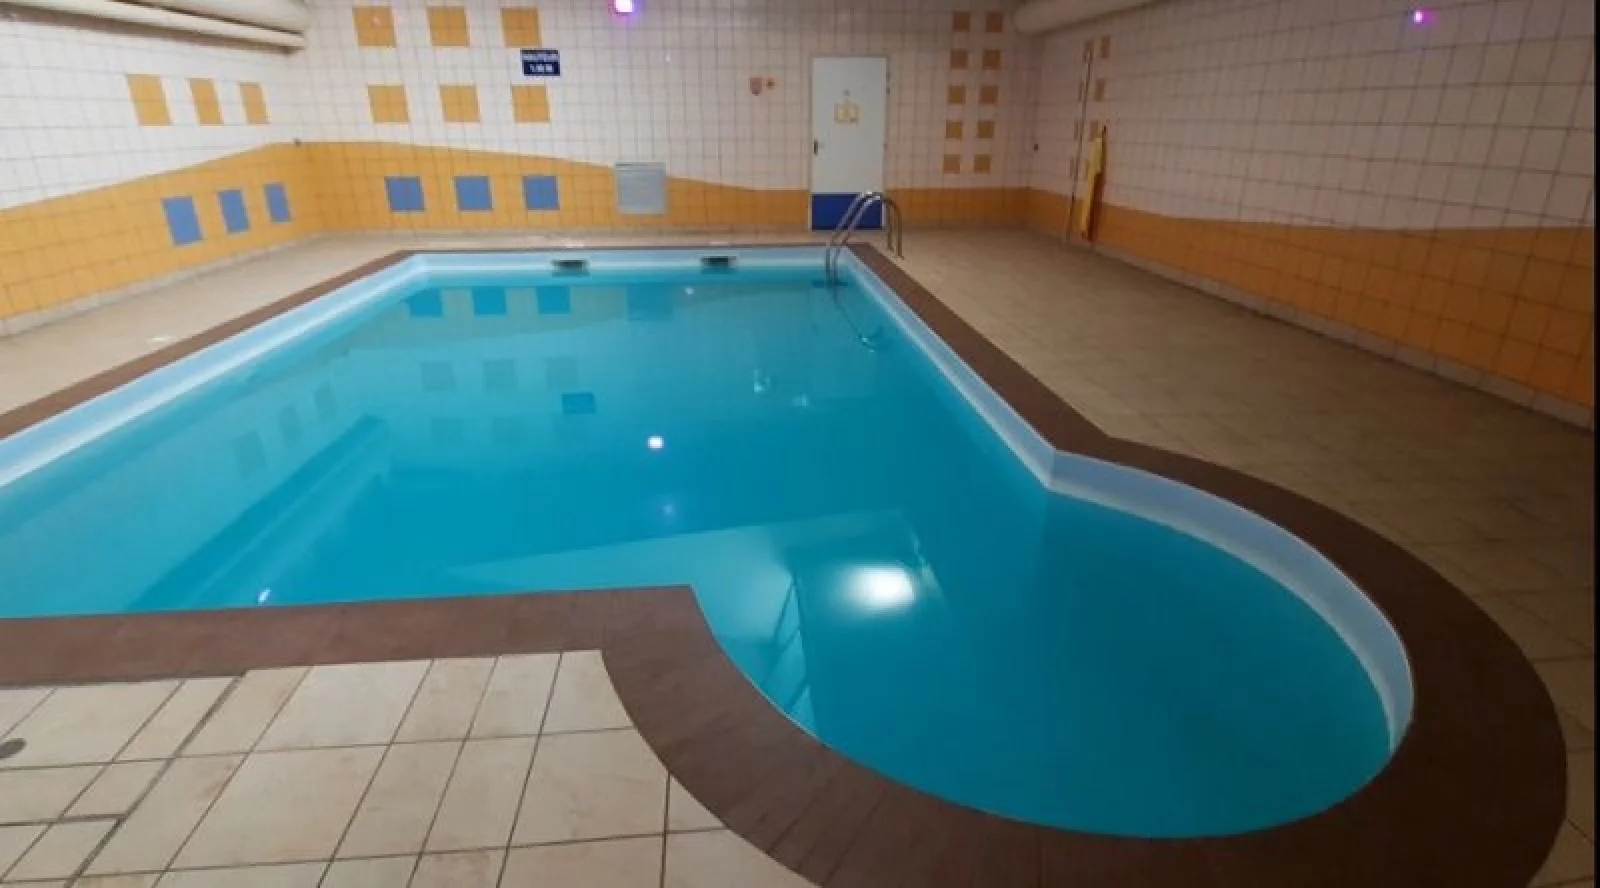 Location studio meubl 19m avec piscine (Poitiers)